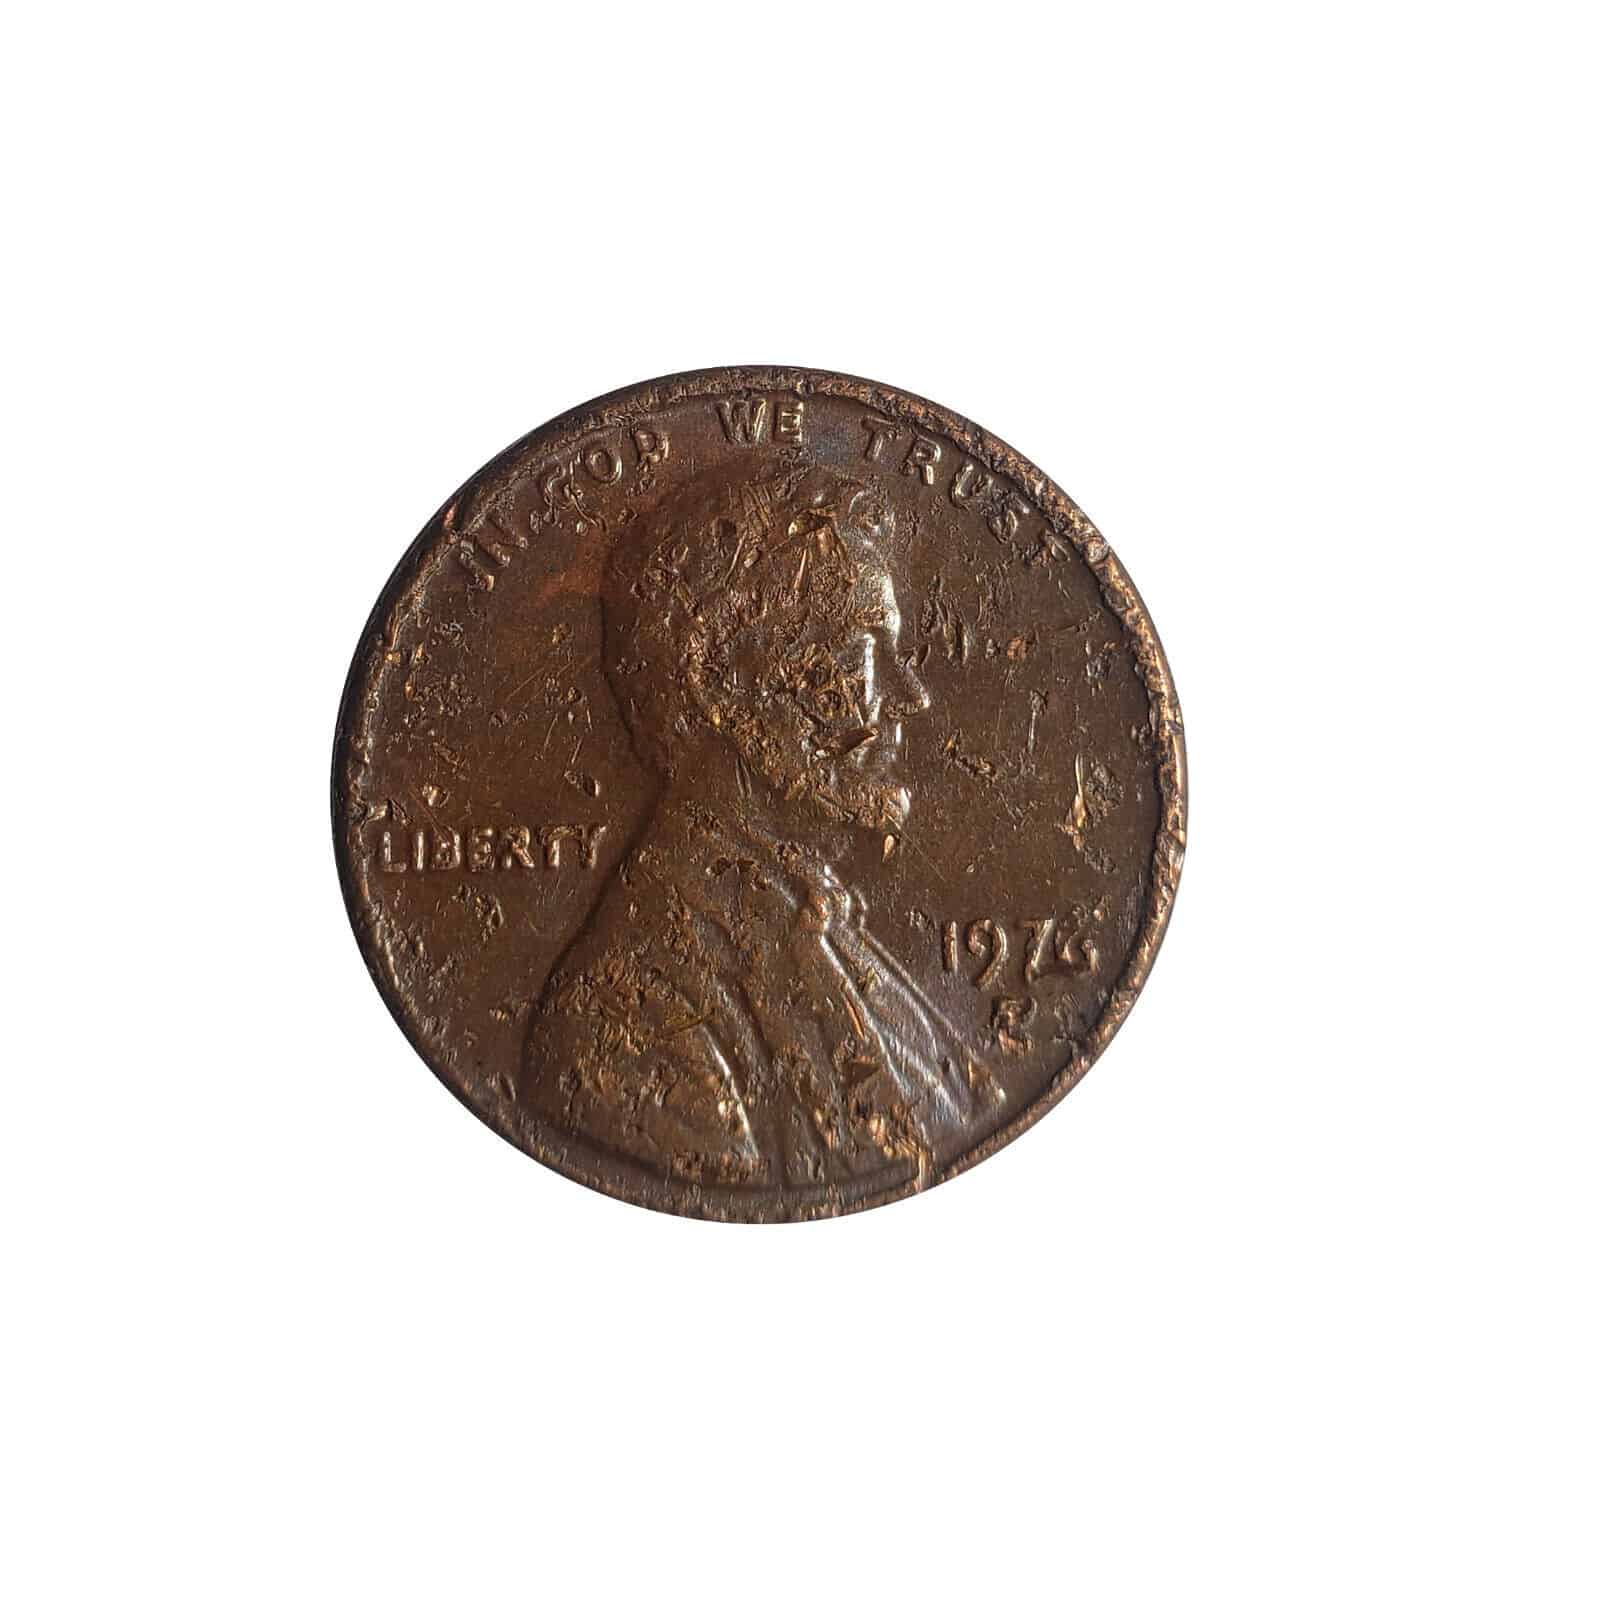 1976 Lincoln Memorial Rare Copper Coin One of a Kind